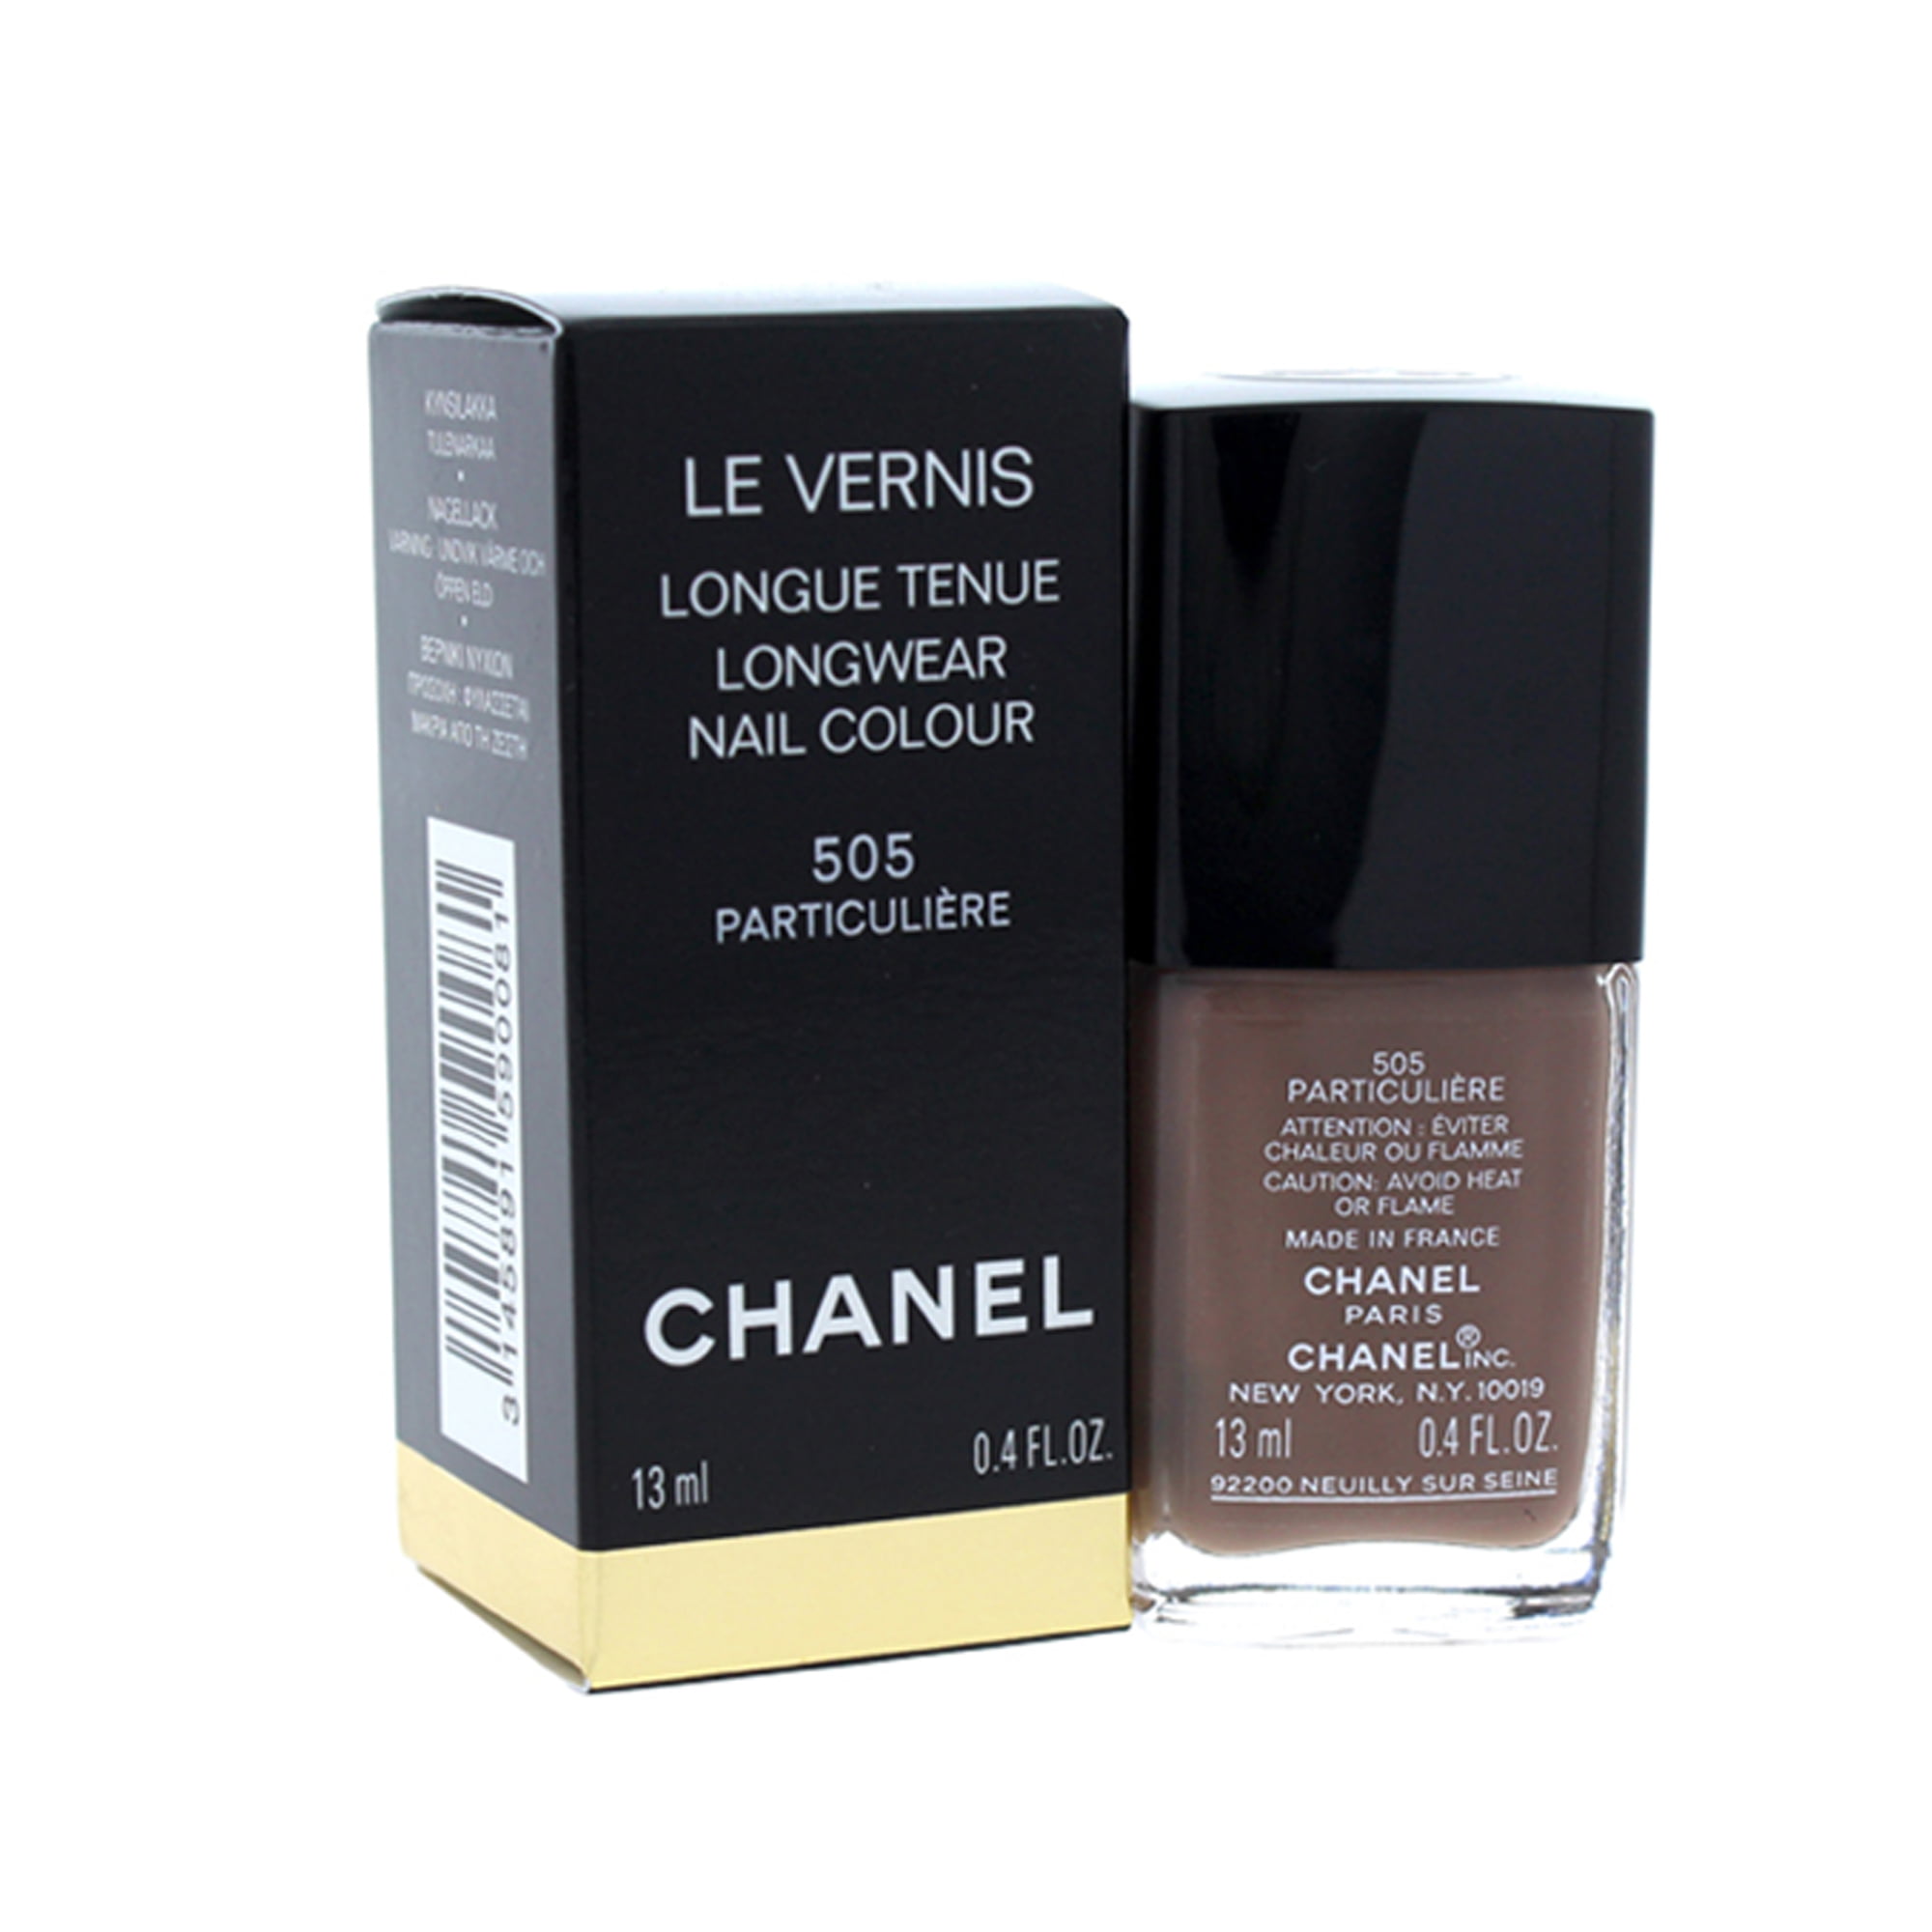 Chanel Le Vernis Longwear Nail Colour - 505 Particuliere 0.4 oz Nail Polish